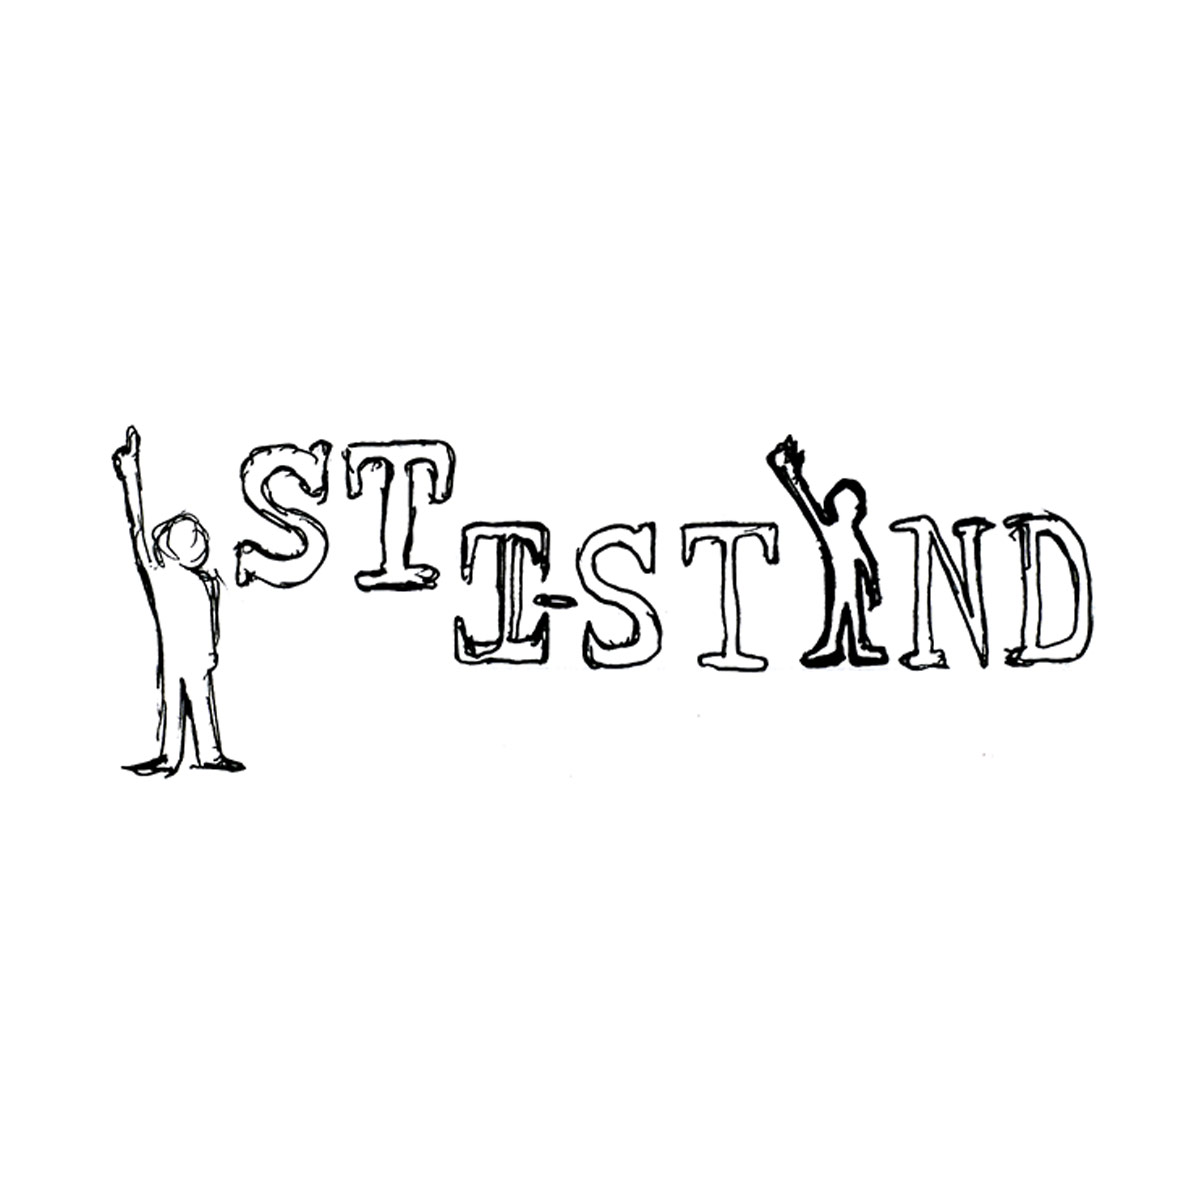 I-Stand - Sketch 2